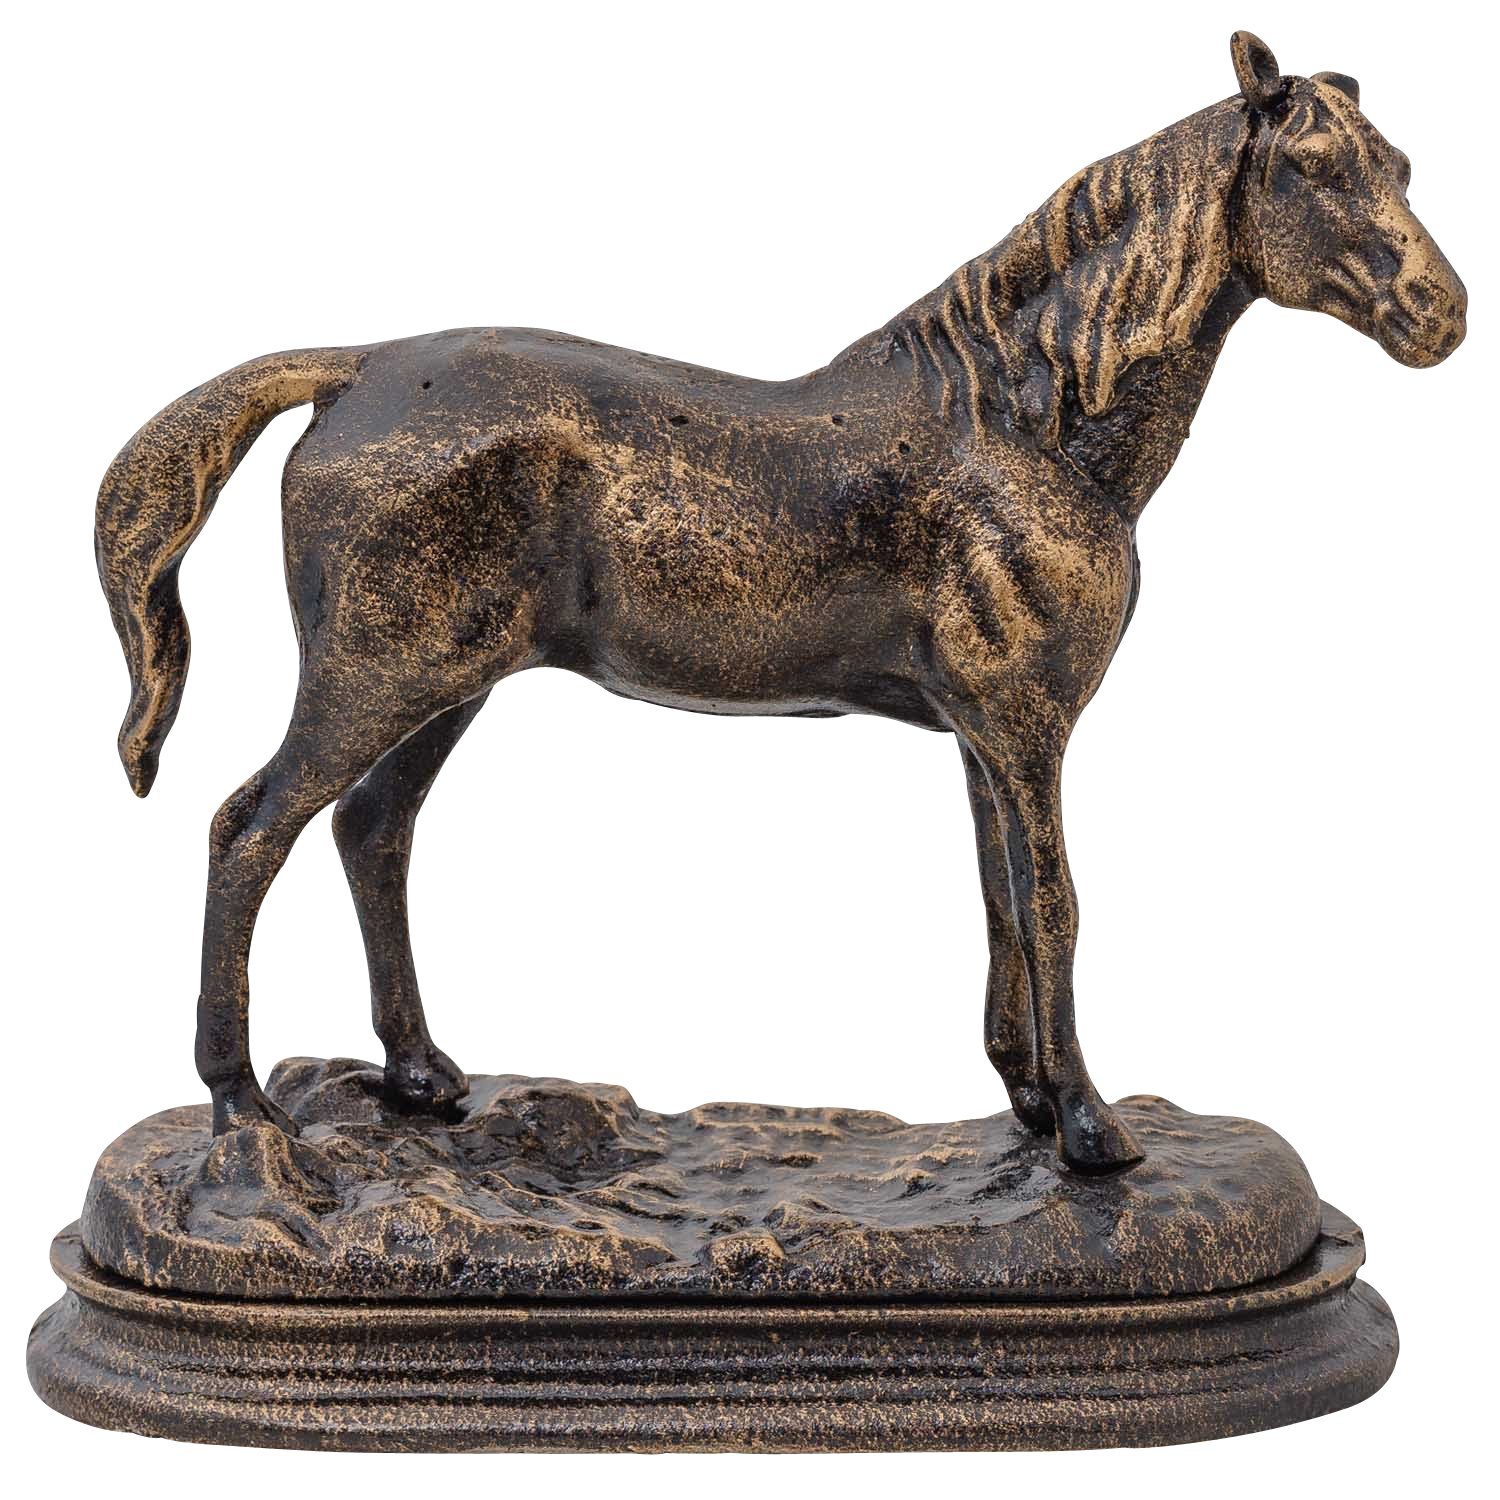 Aubaho Dekofigur Pferd Skulptur Figur Tier Eisen Dekoration Antik-Stil 21cm